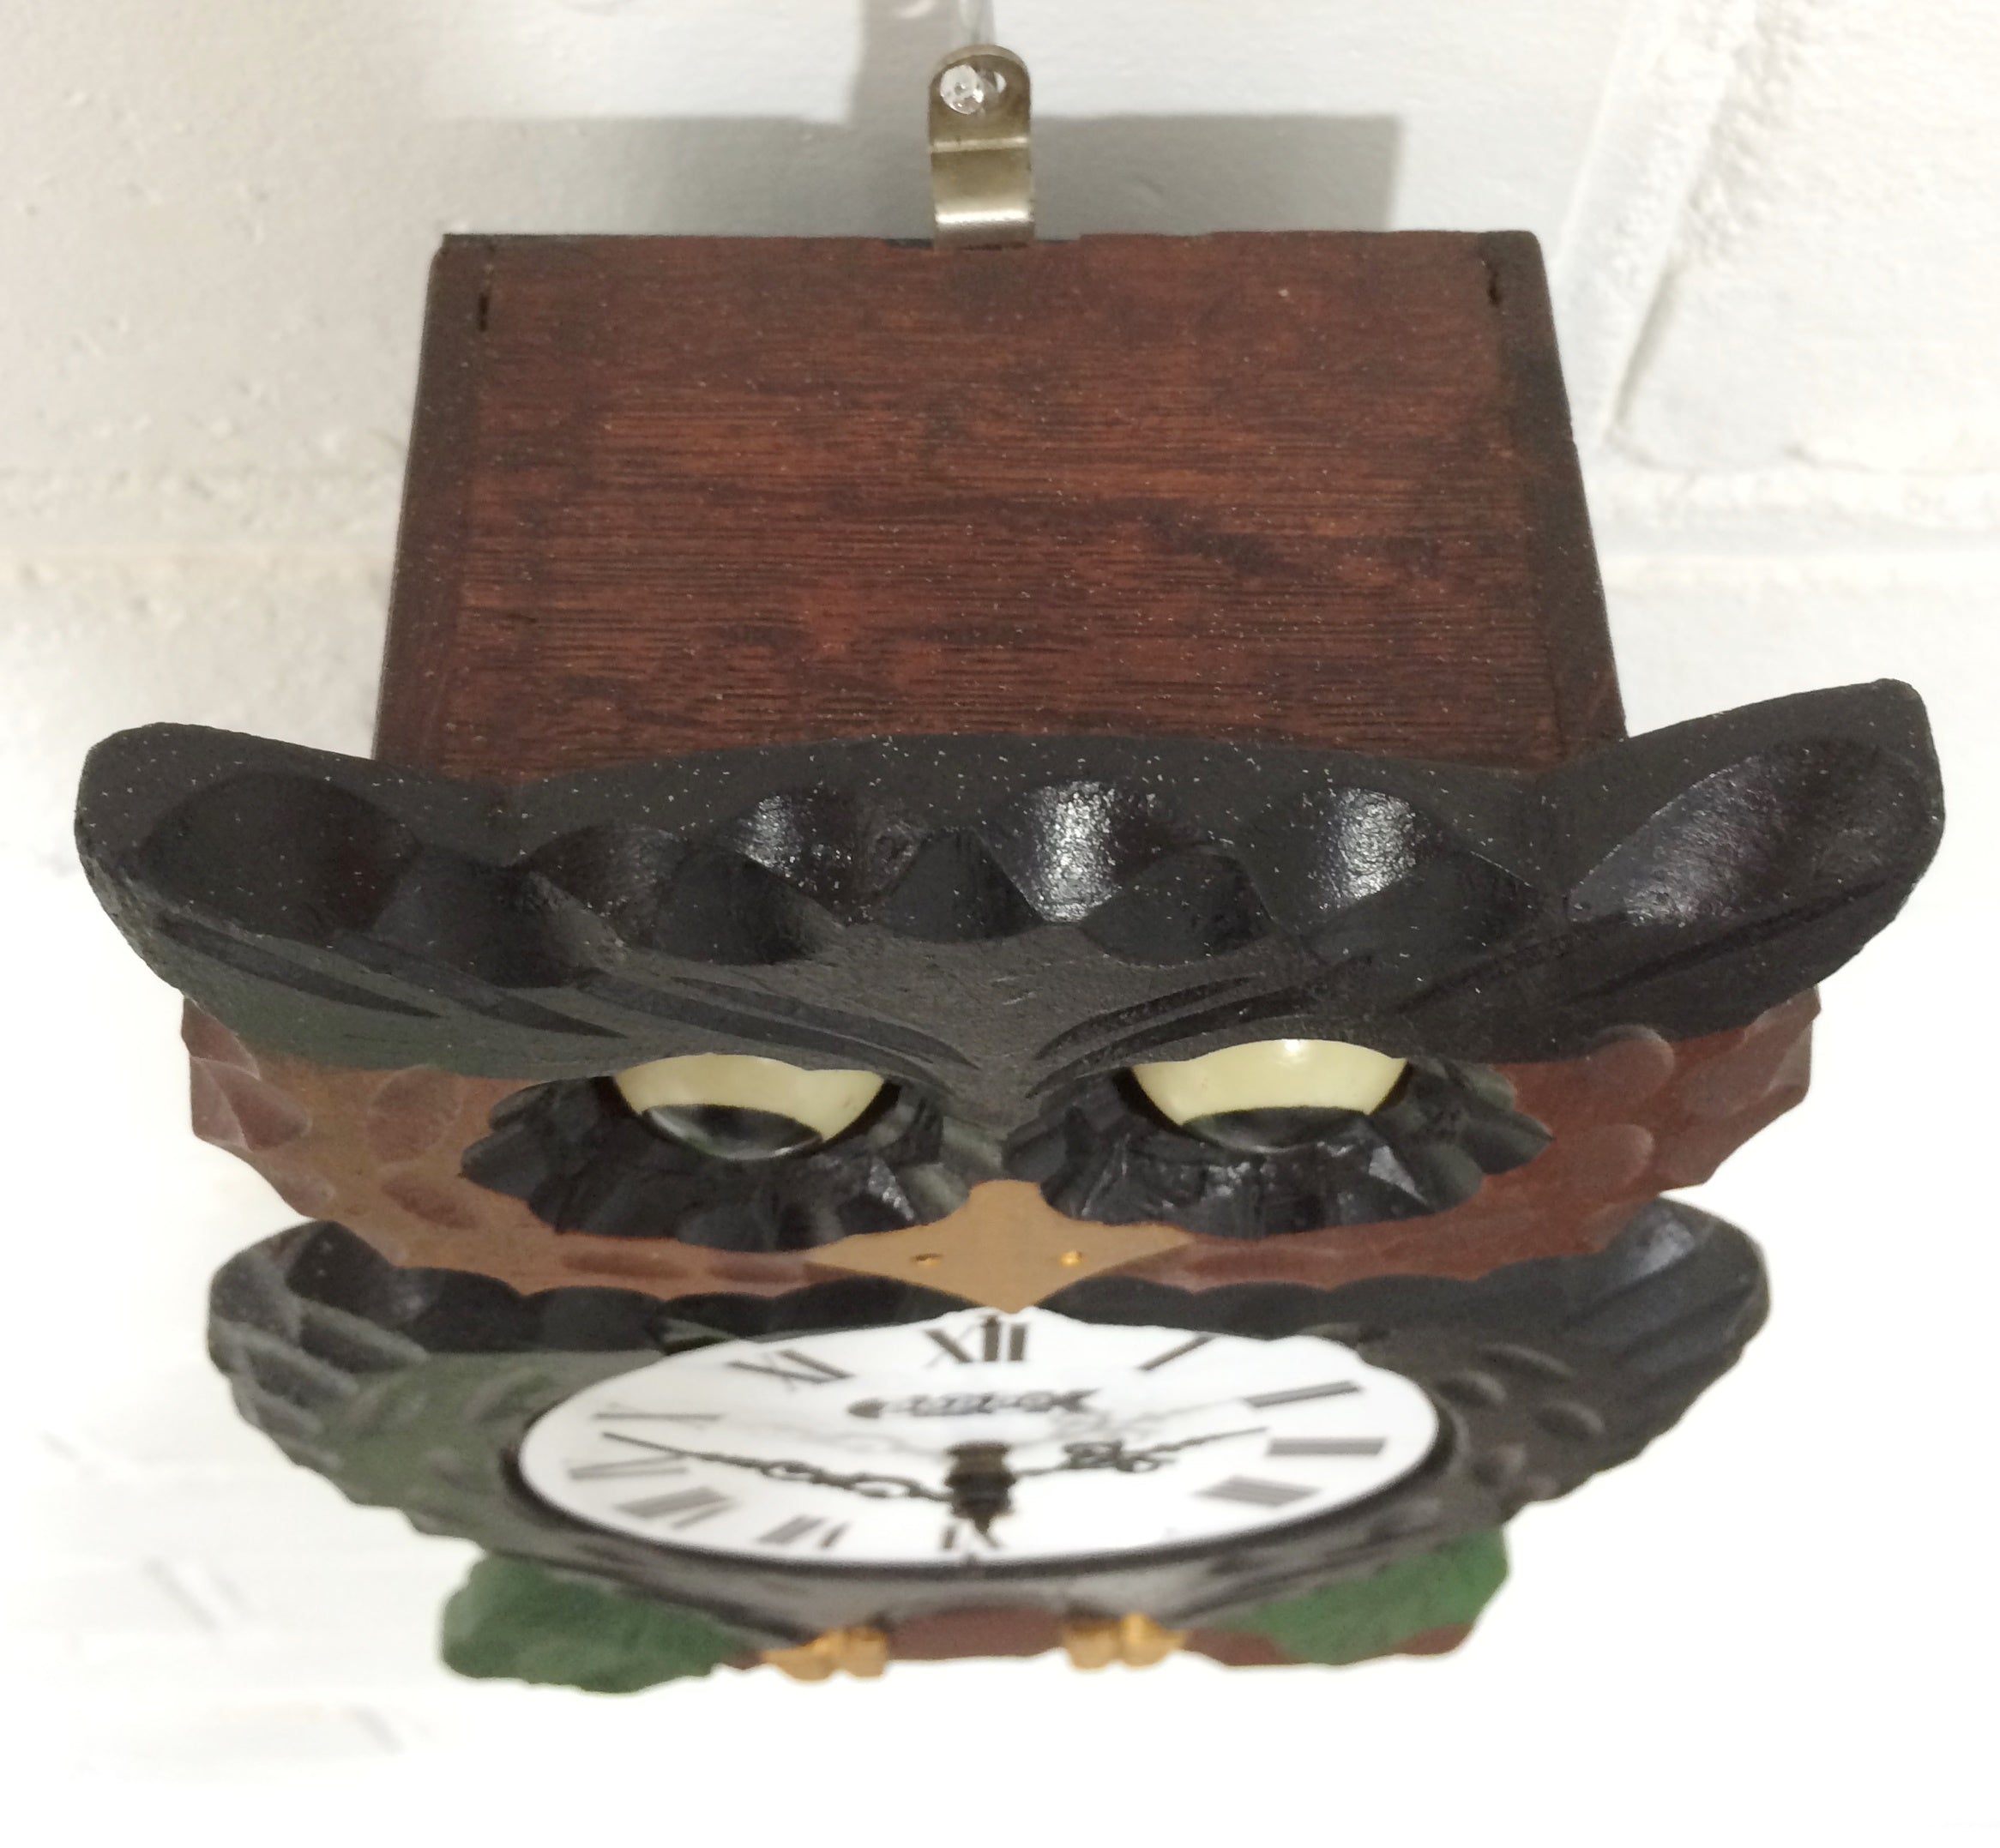 Vintage Poppo Owl Cuckoo Clock | eXibit collection